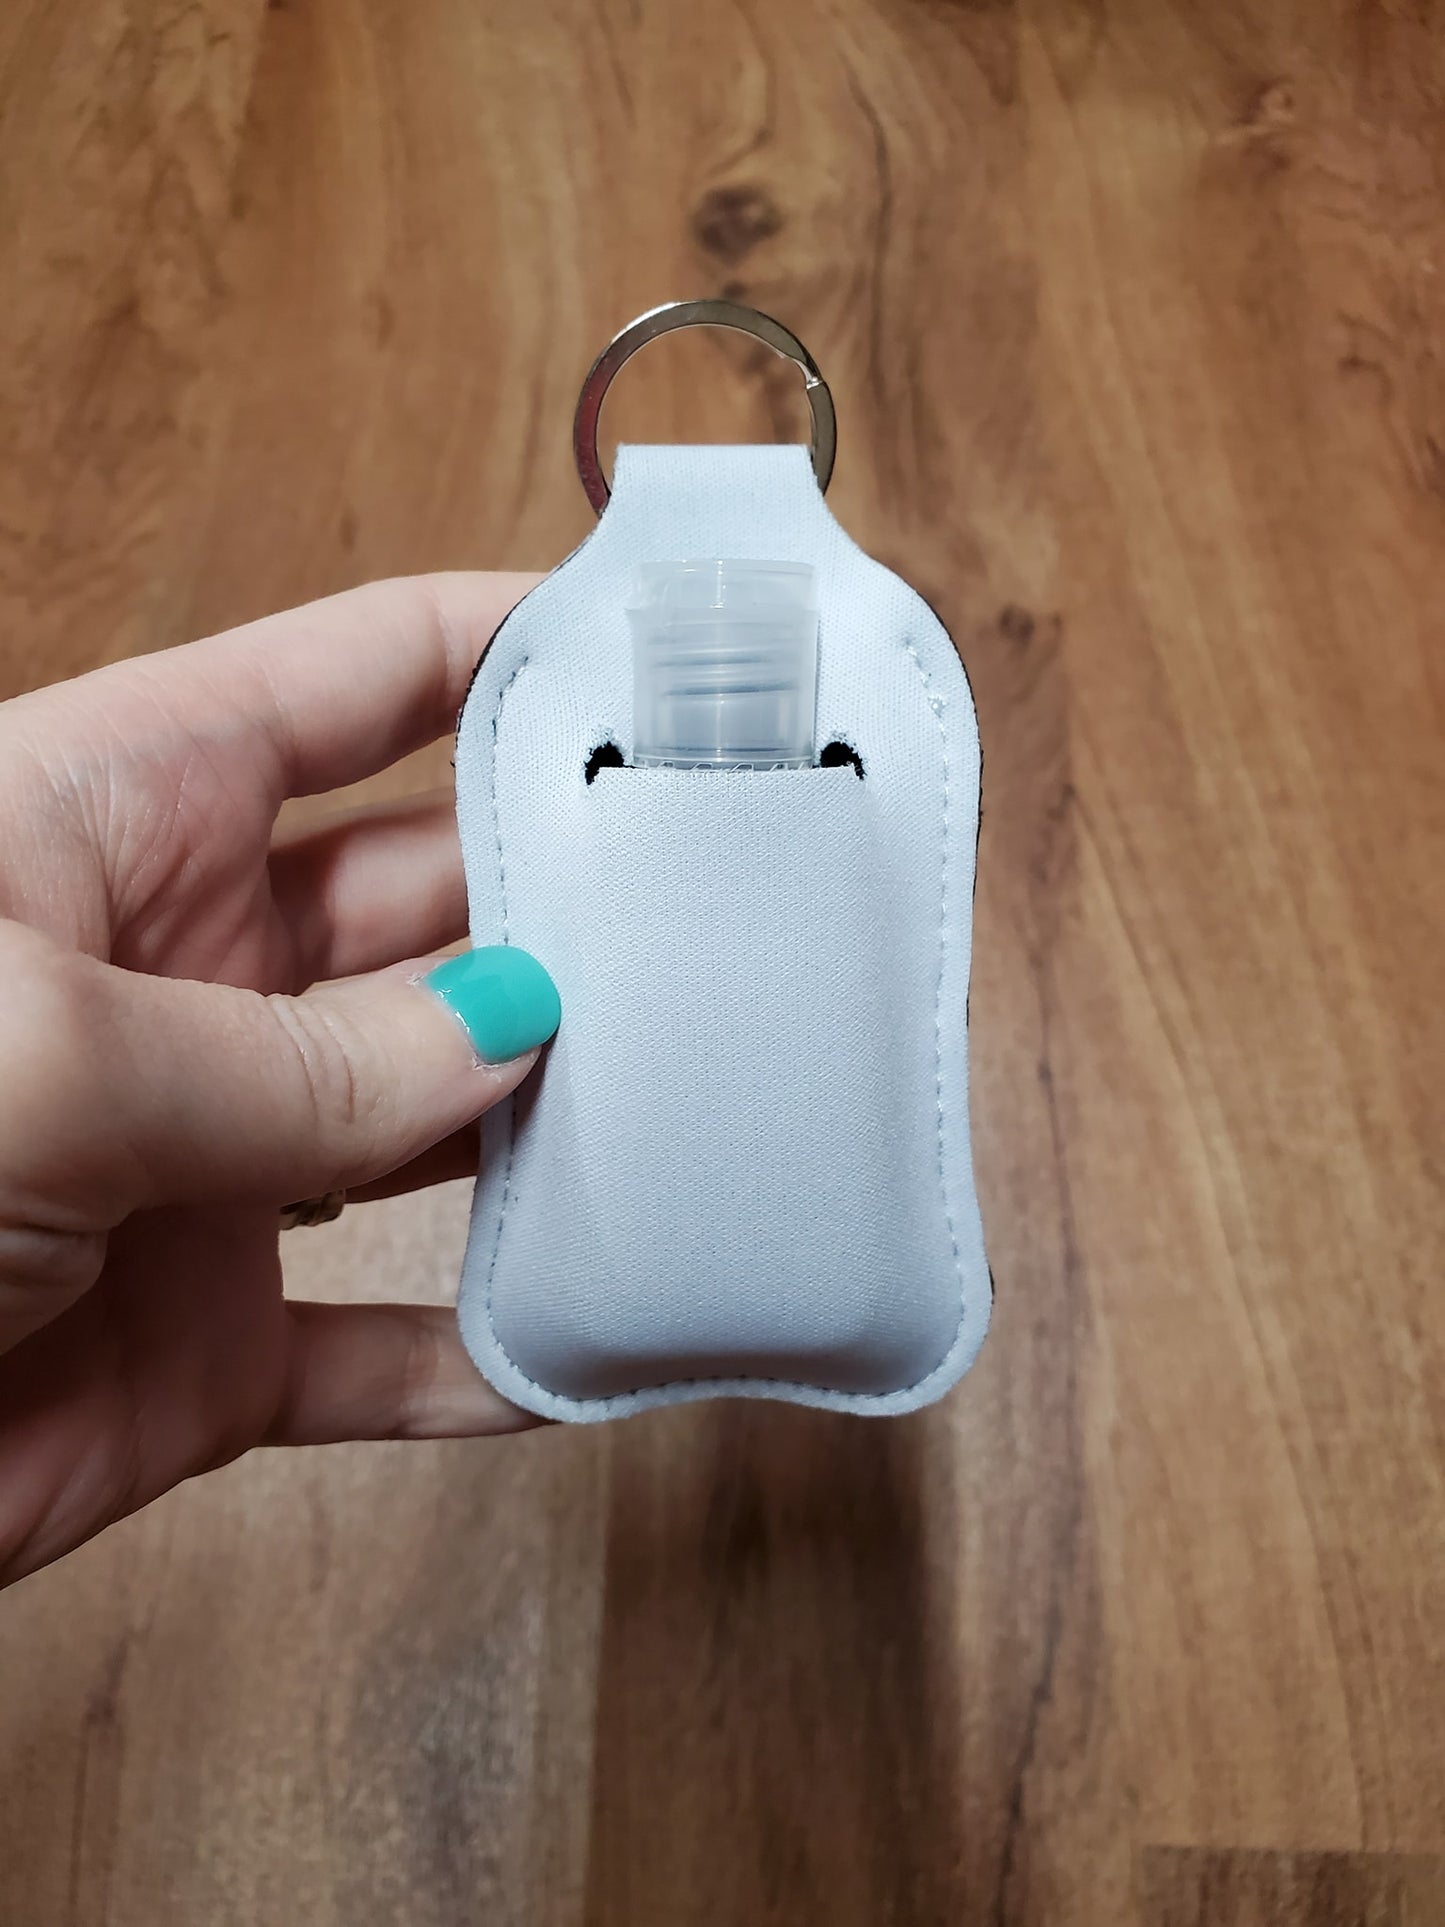 Hand Sanitizer Holder with Bottle